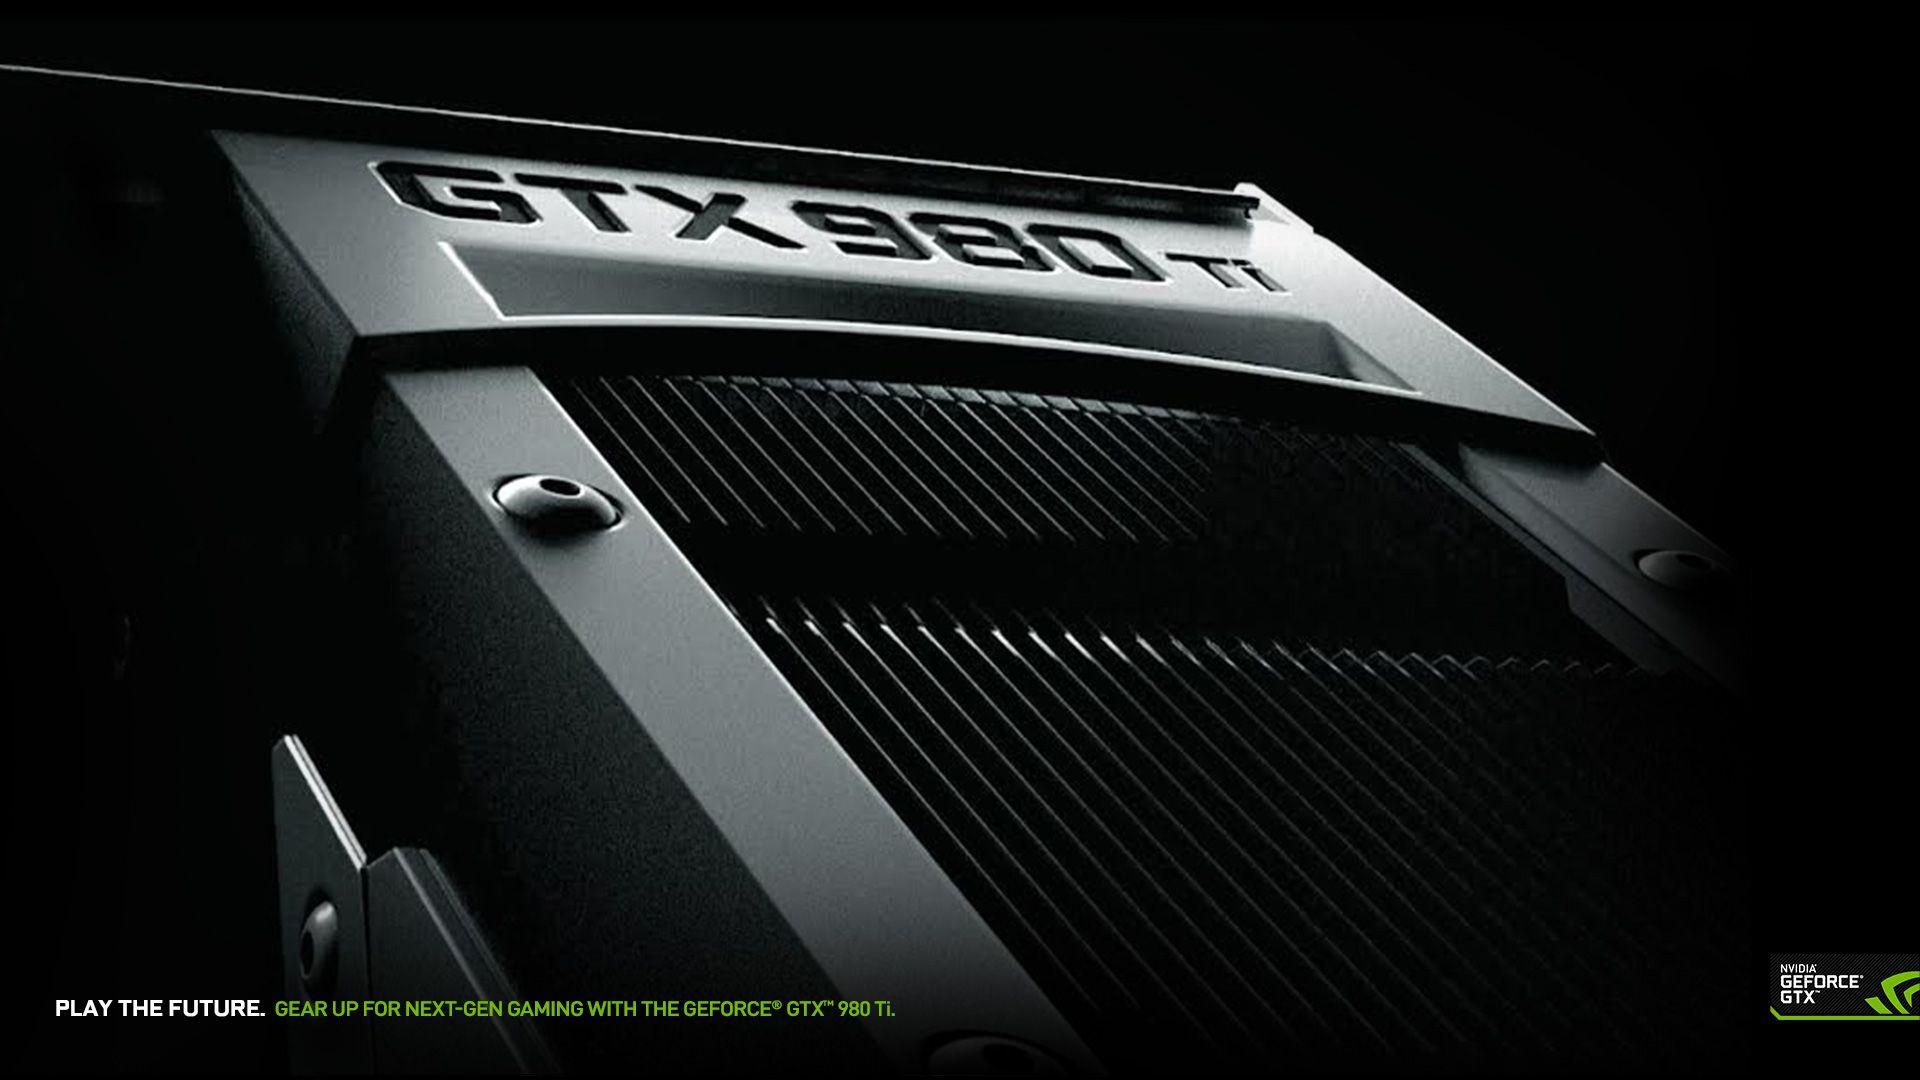 Download The GeForce GTX 980 Ti Wallpaper